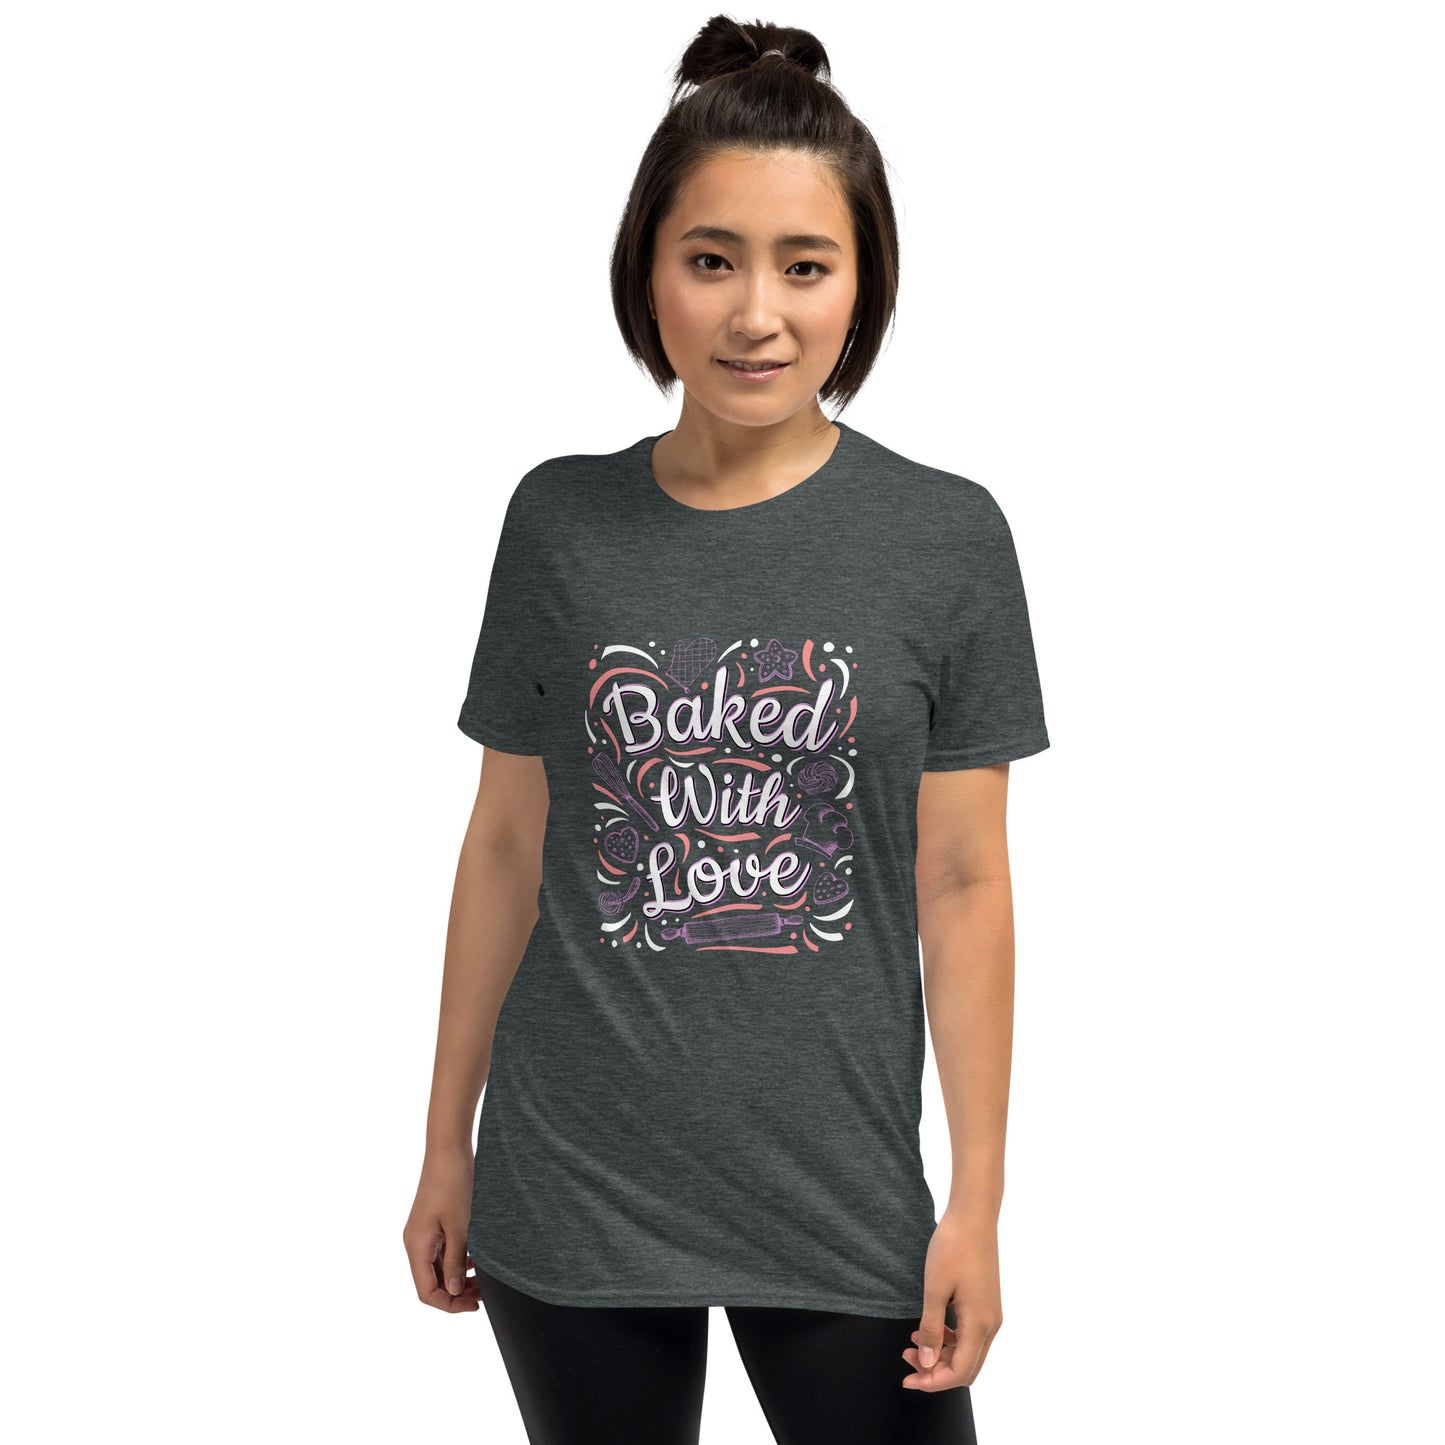 Baked with love - Short-Sleeve Unisex T-Shirt - HobbyMeFree